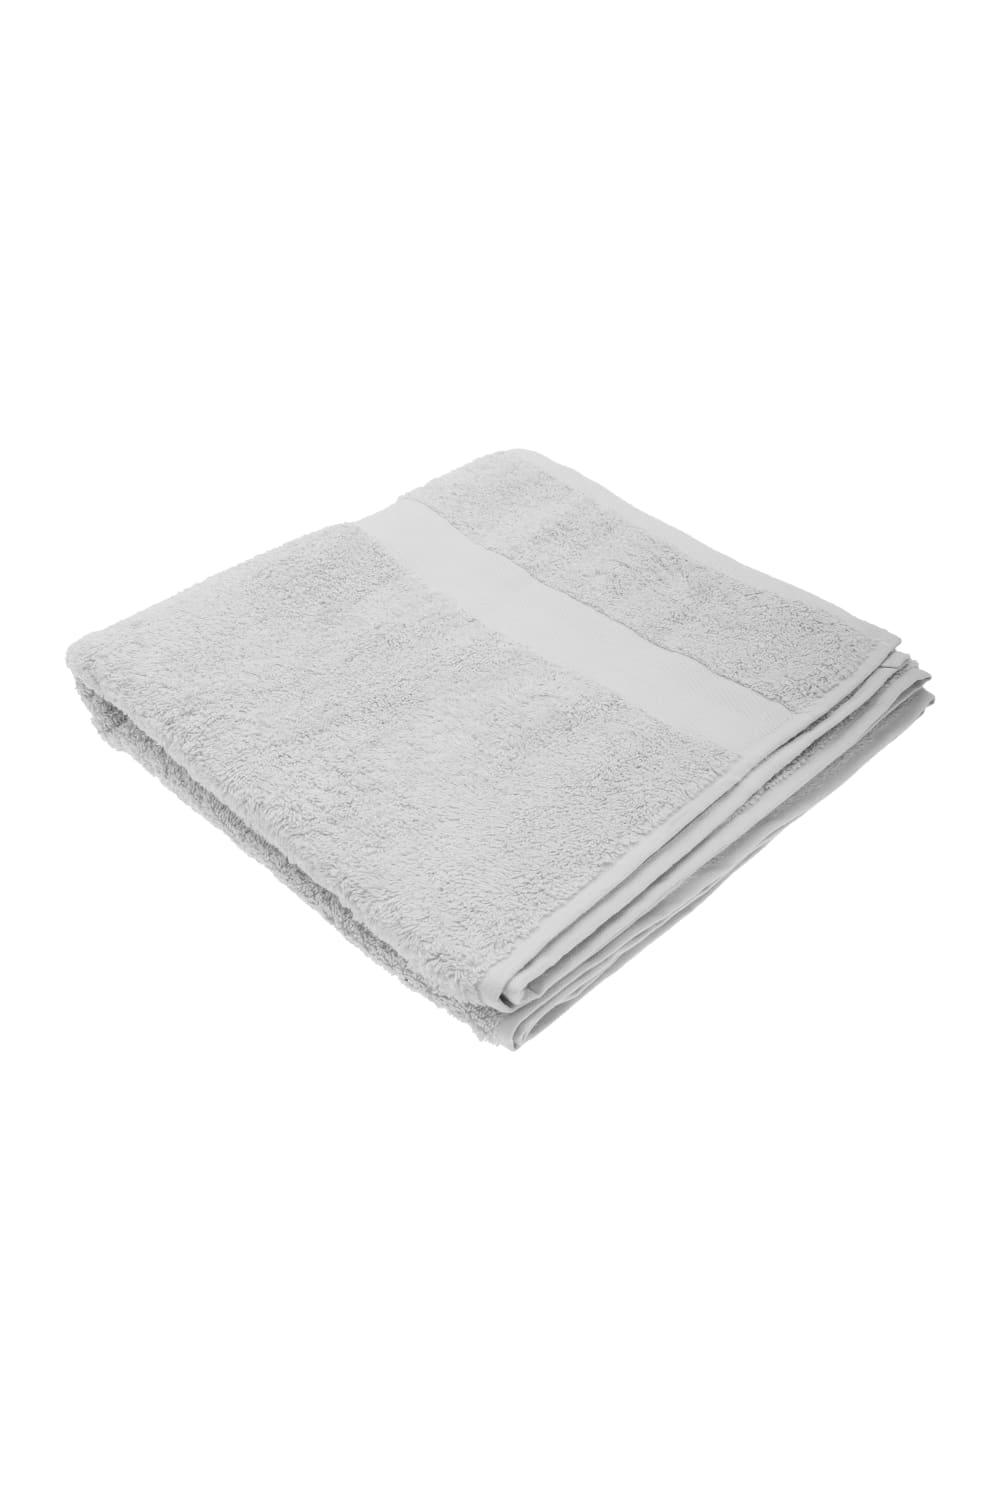 Jassz Premium Heavyweight Plain Bath Towel 28 x 56 inches (Pack of 2) (White) (One Size)